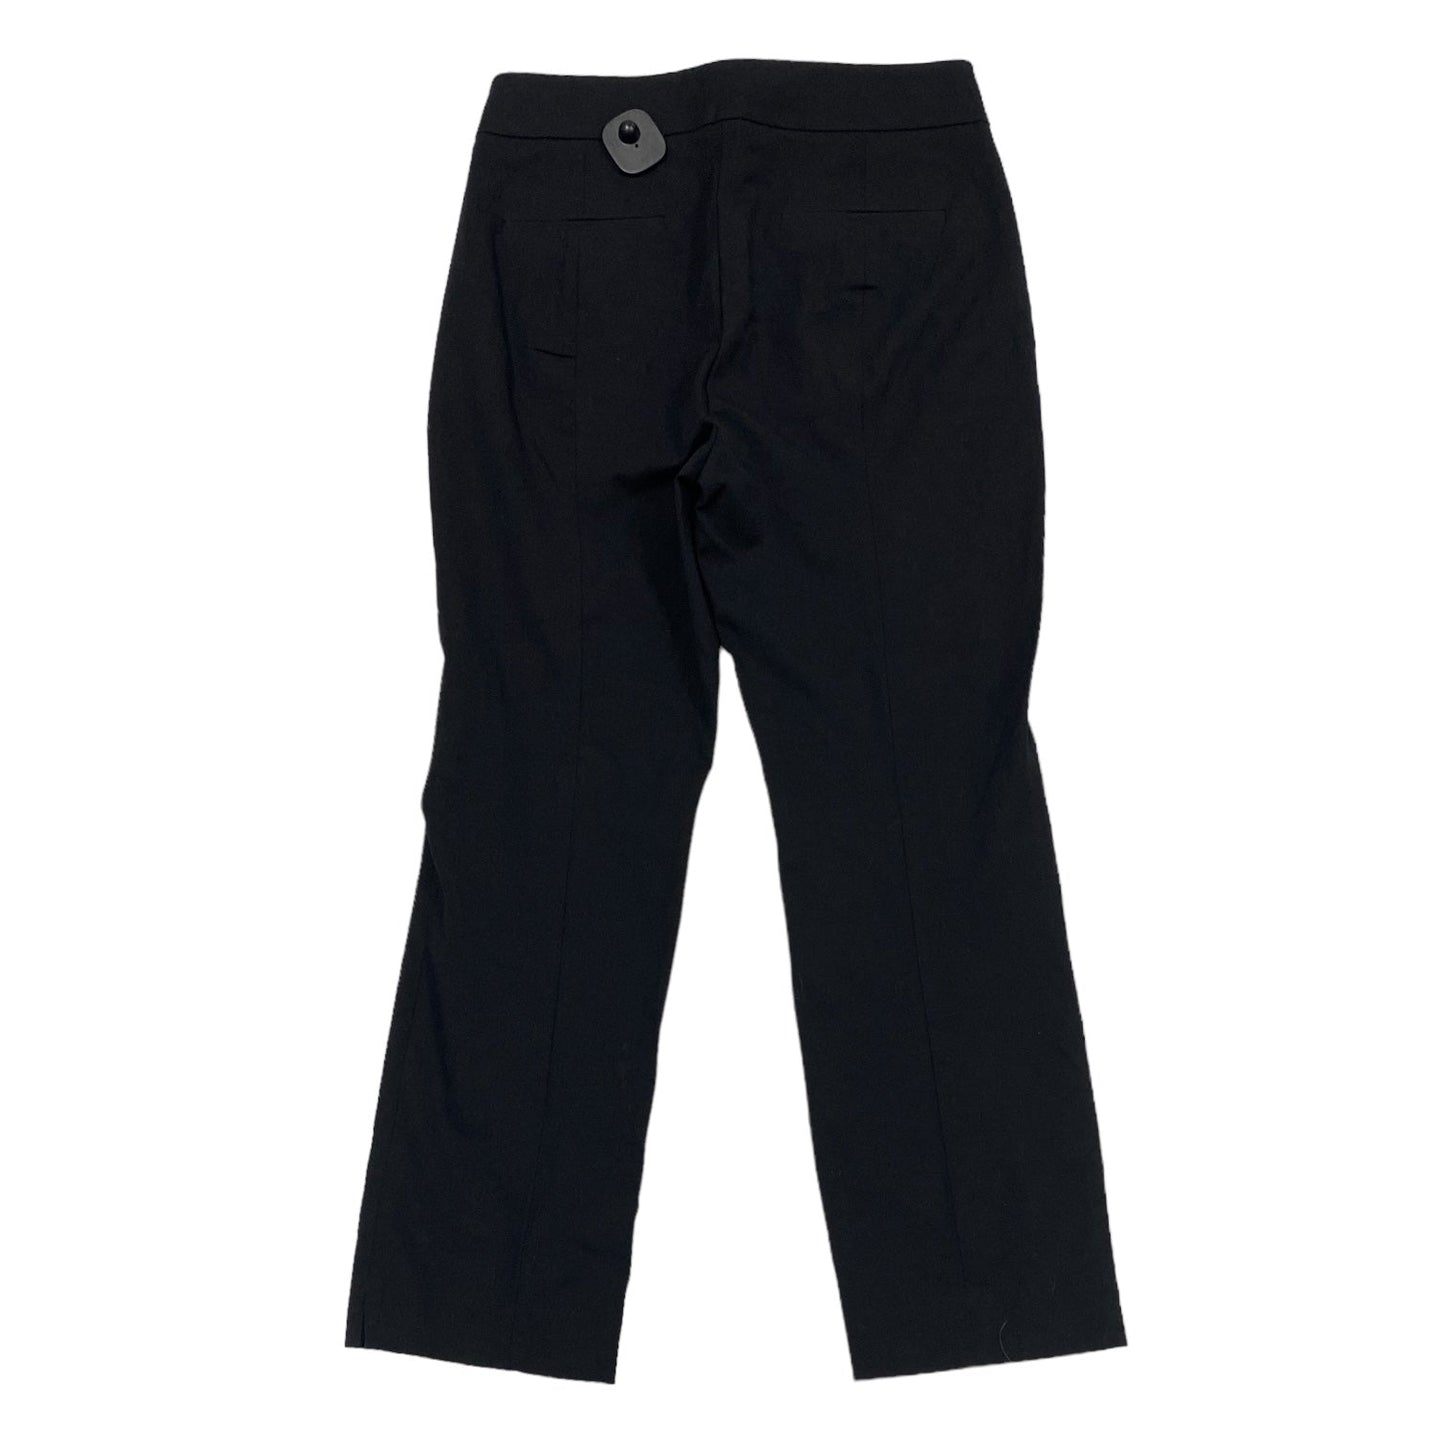 Black Pants Dress J. Crew, Size 8